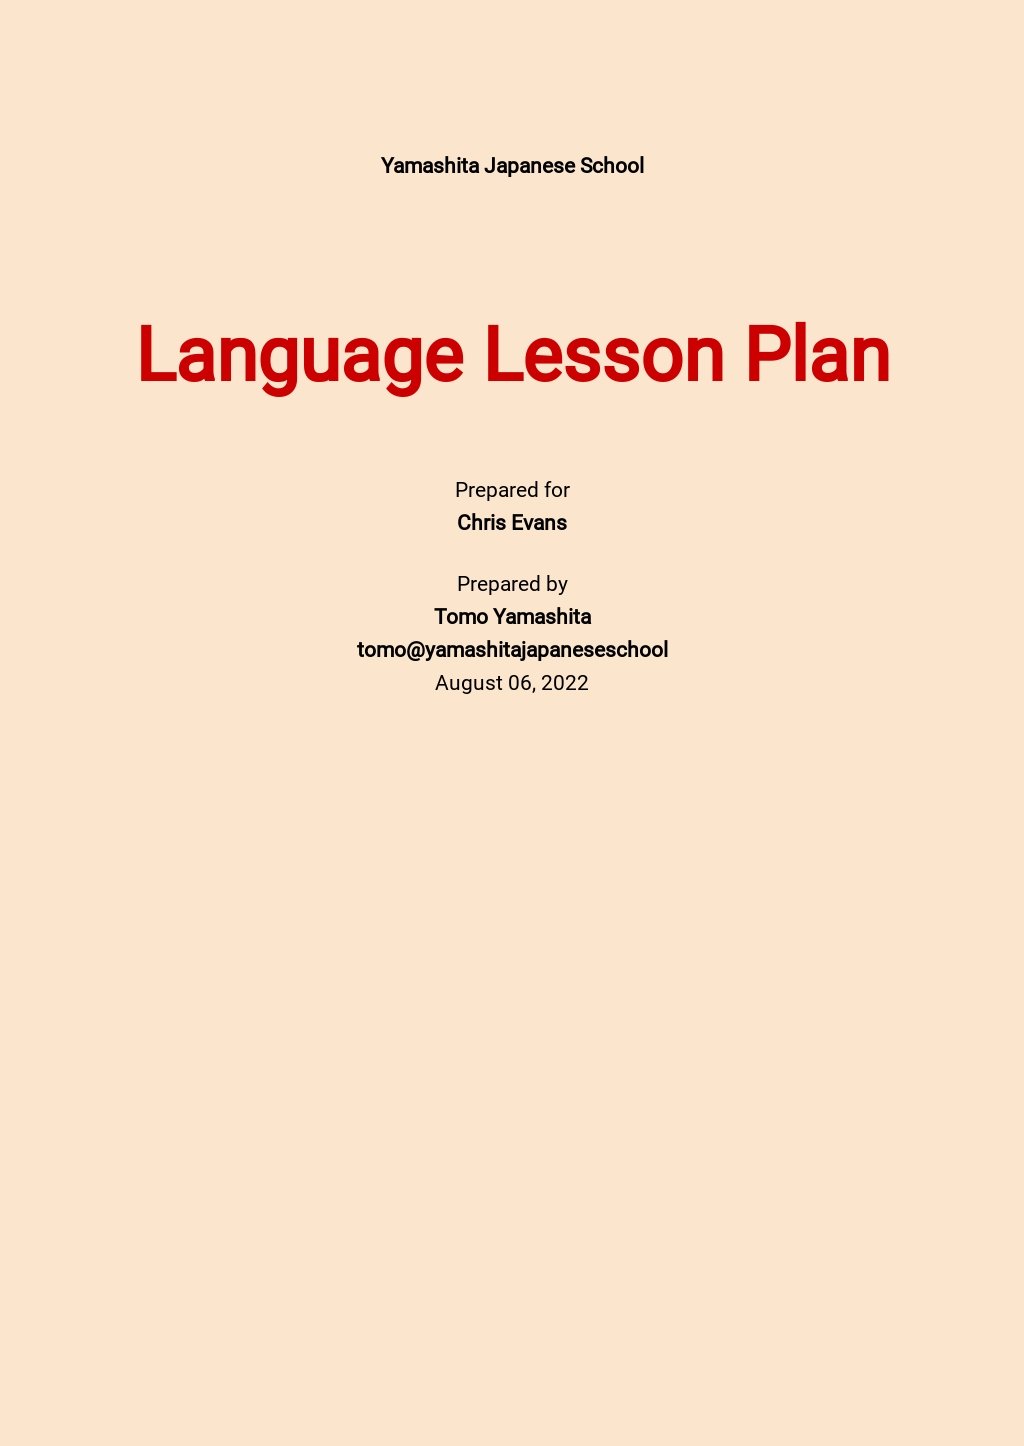 Language Lesson Plan Template.jpe